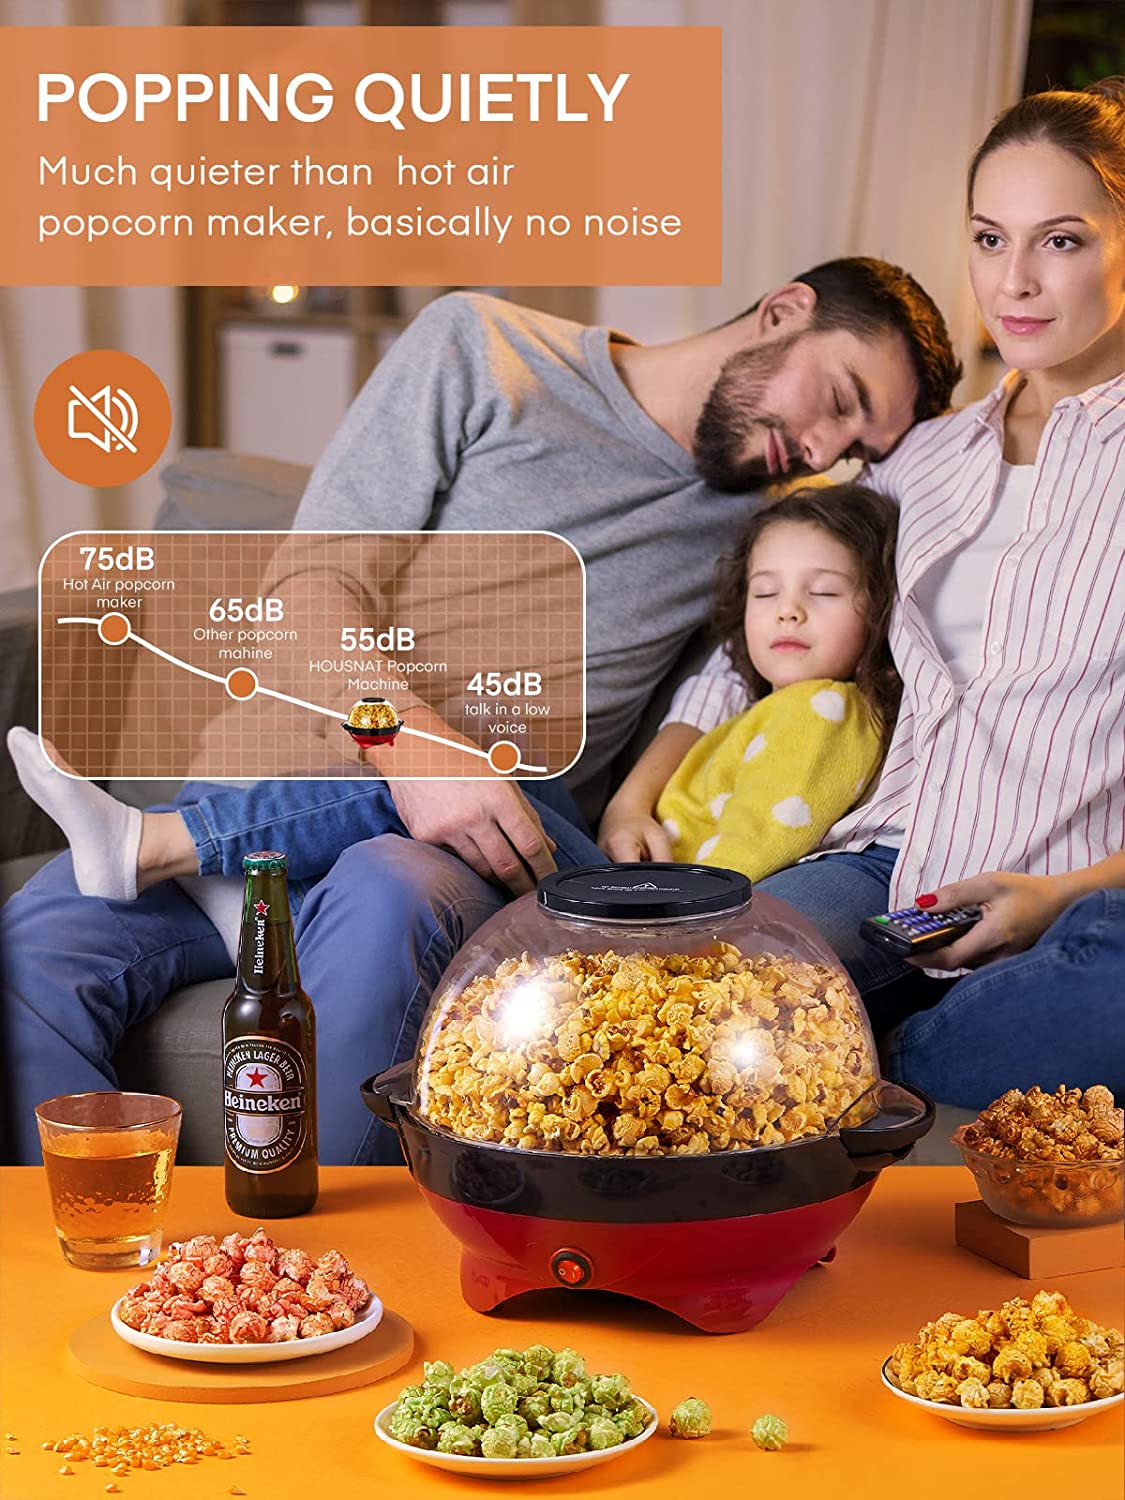 Popcorn Popper, 6 Qts Popcorn Maker with Stirring Rod, Detachable &  Nonstick Plate, Cool Touch Handles, Popcorn Machine 